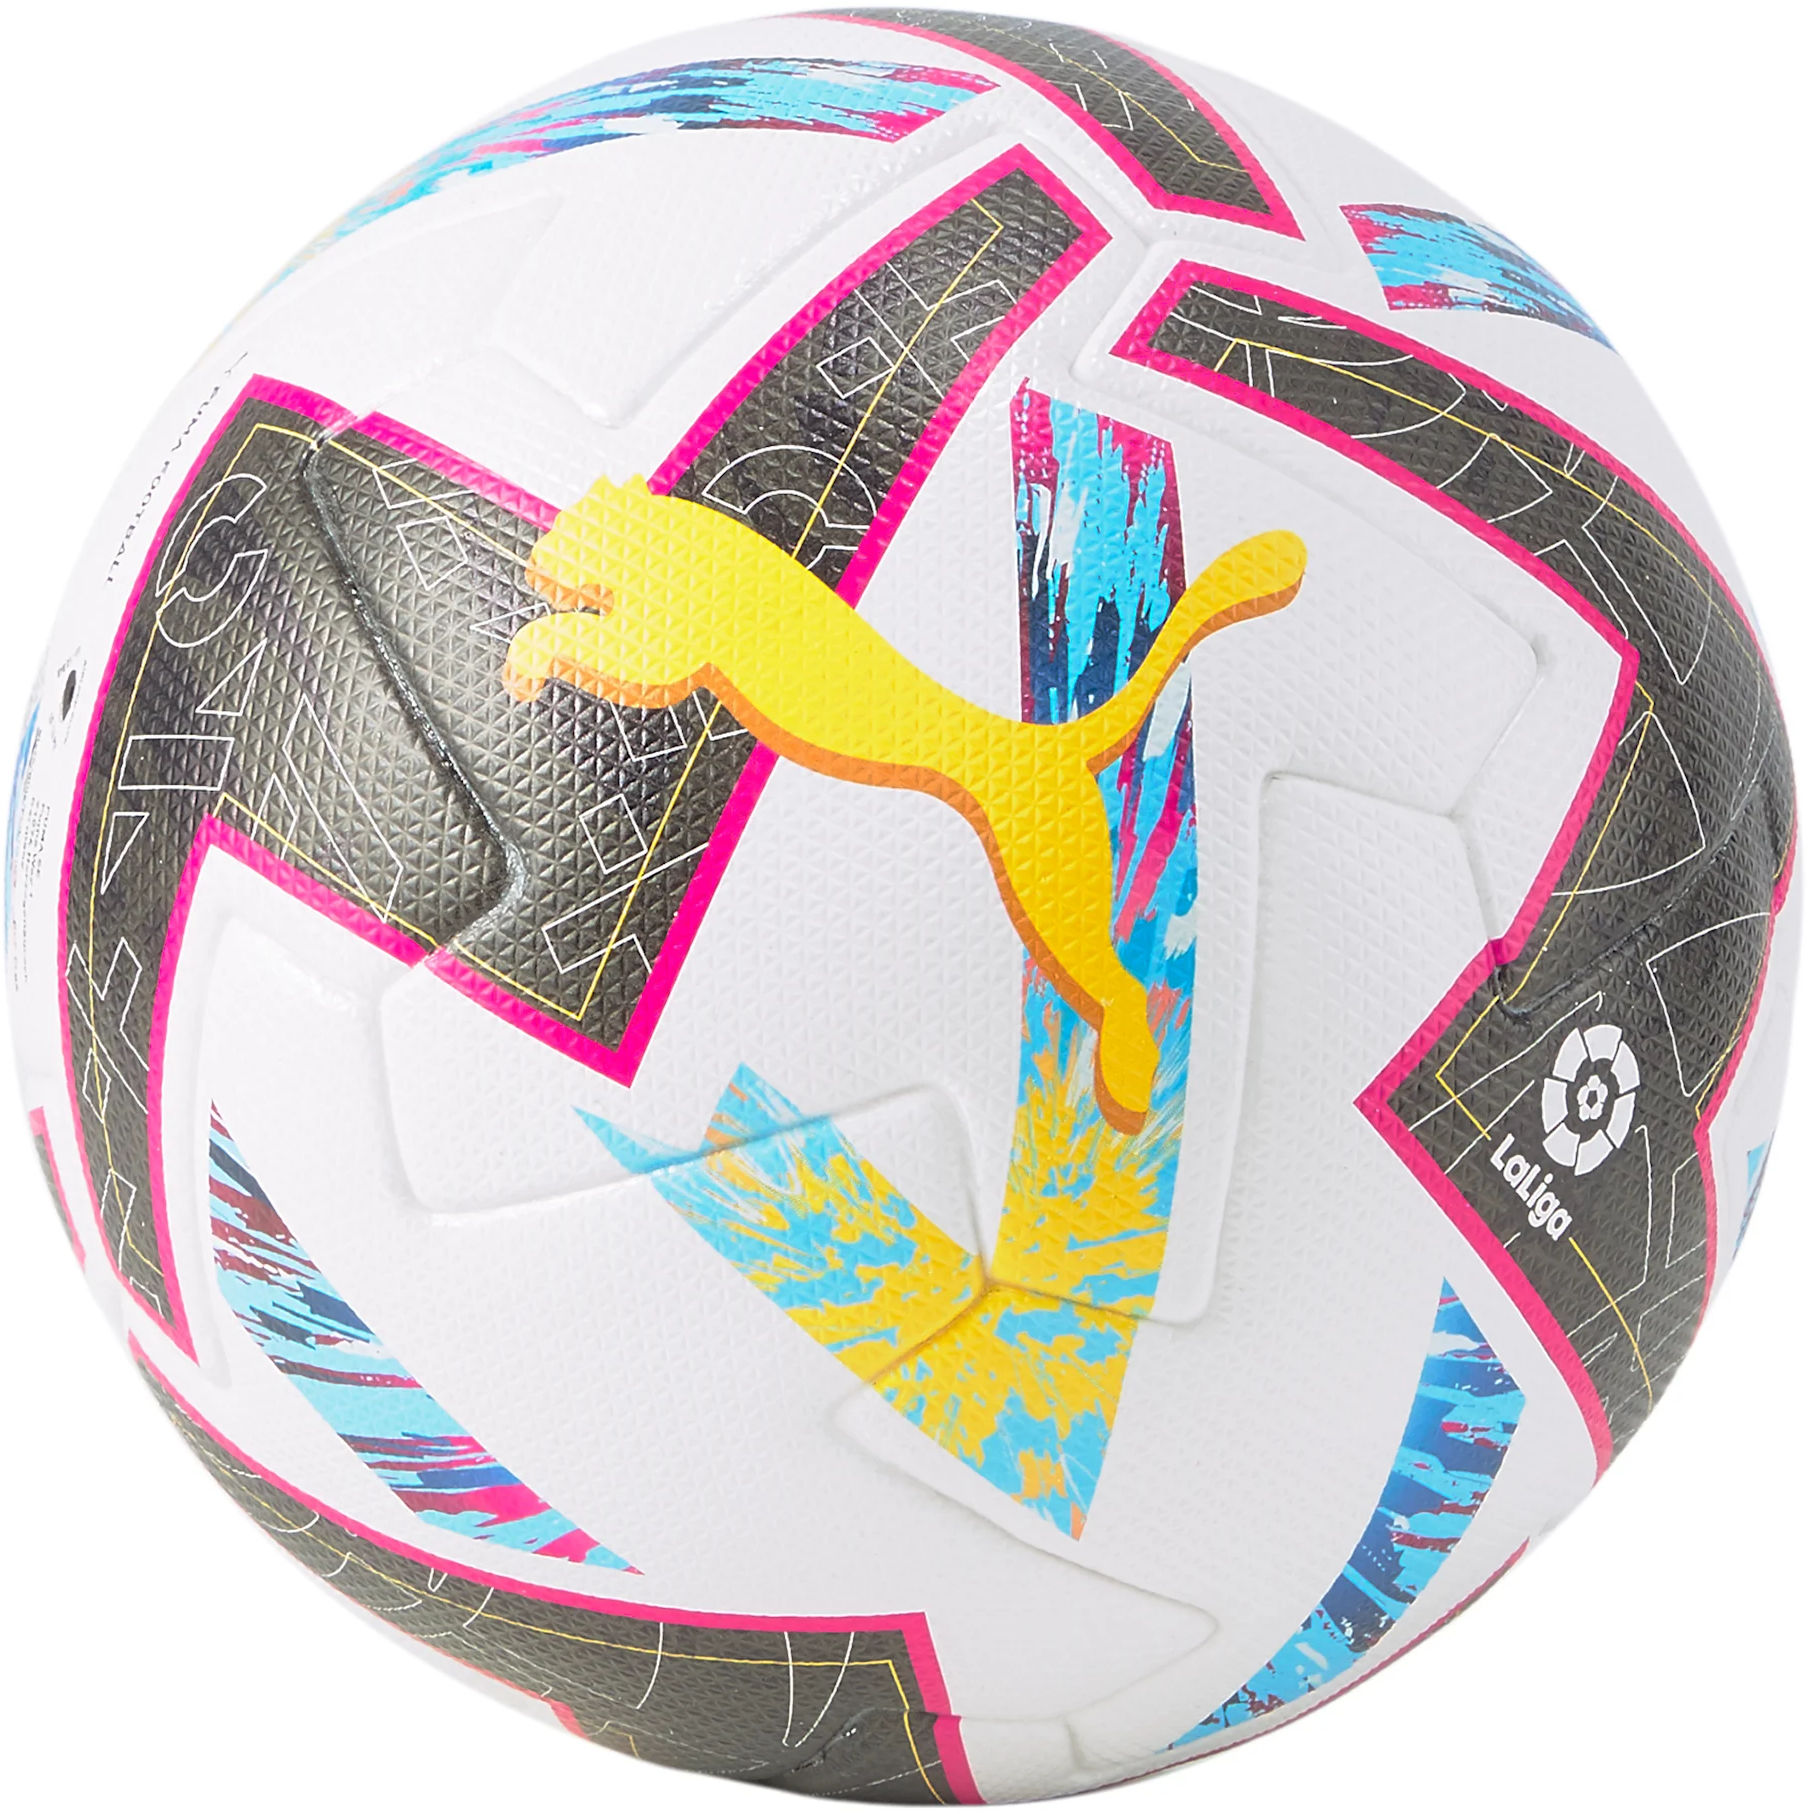 Minge Puma Orbita LaLiga 1 (FIFA Quality Pro)